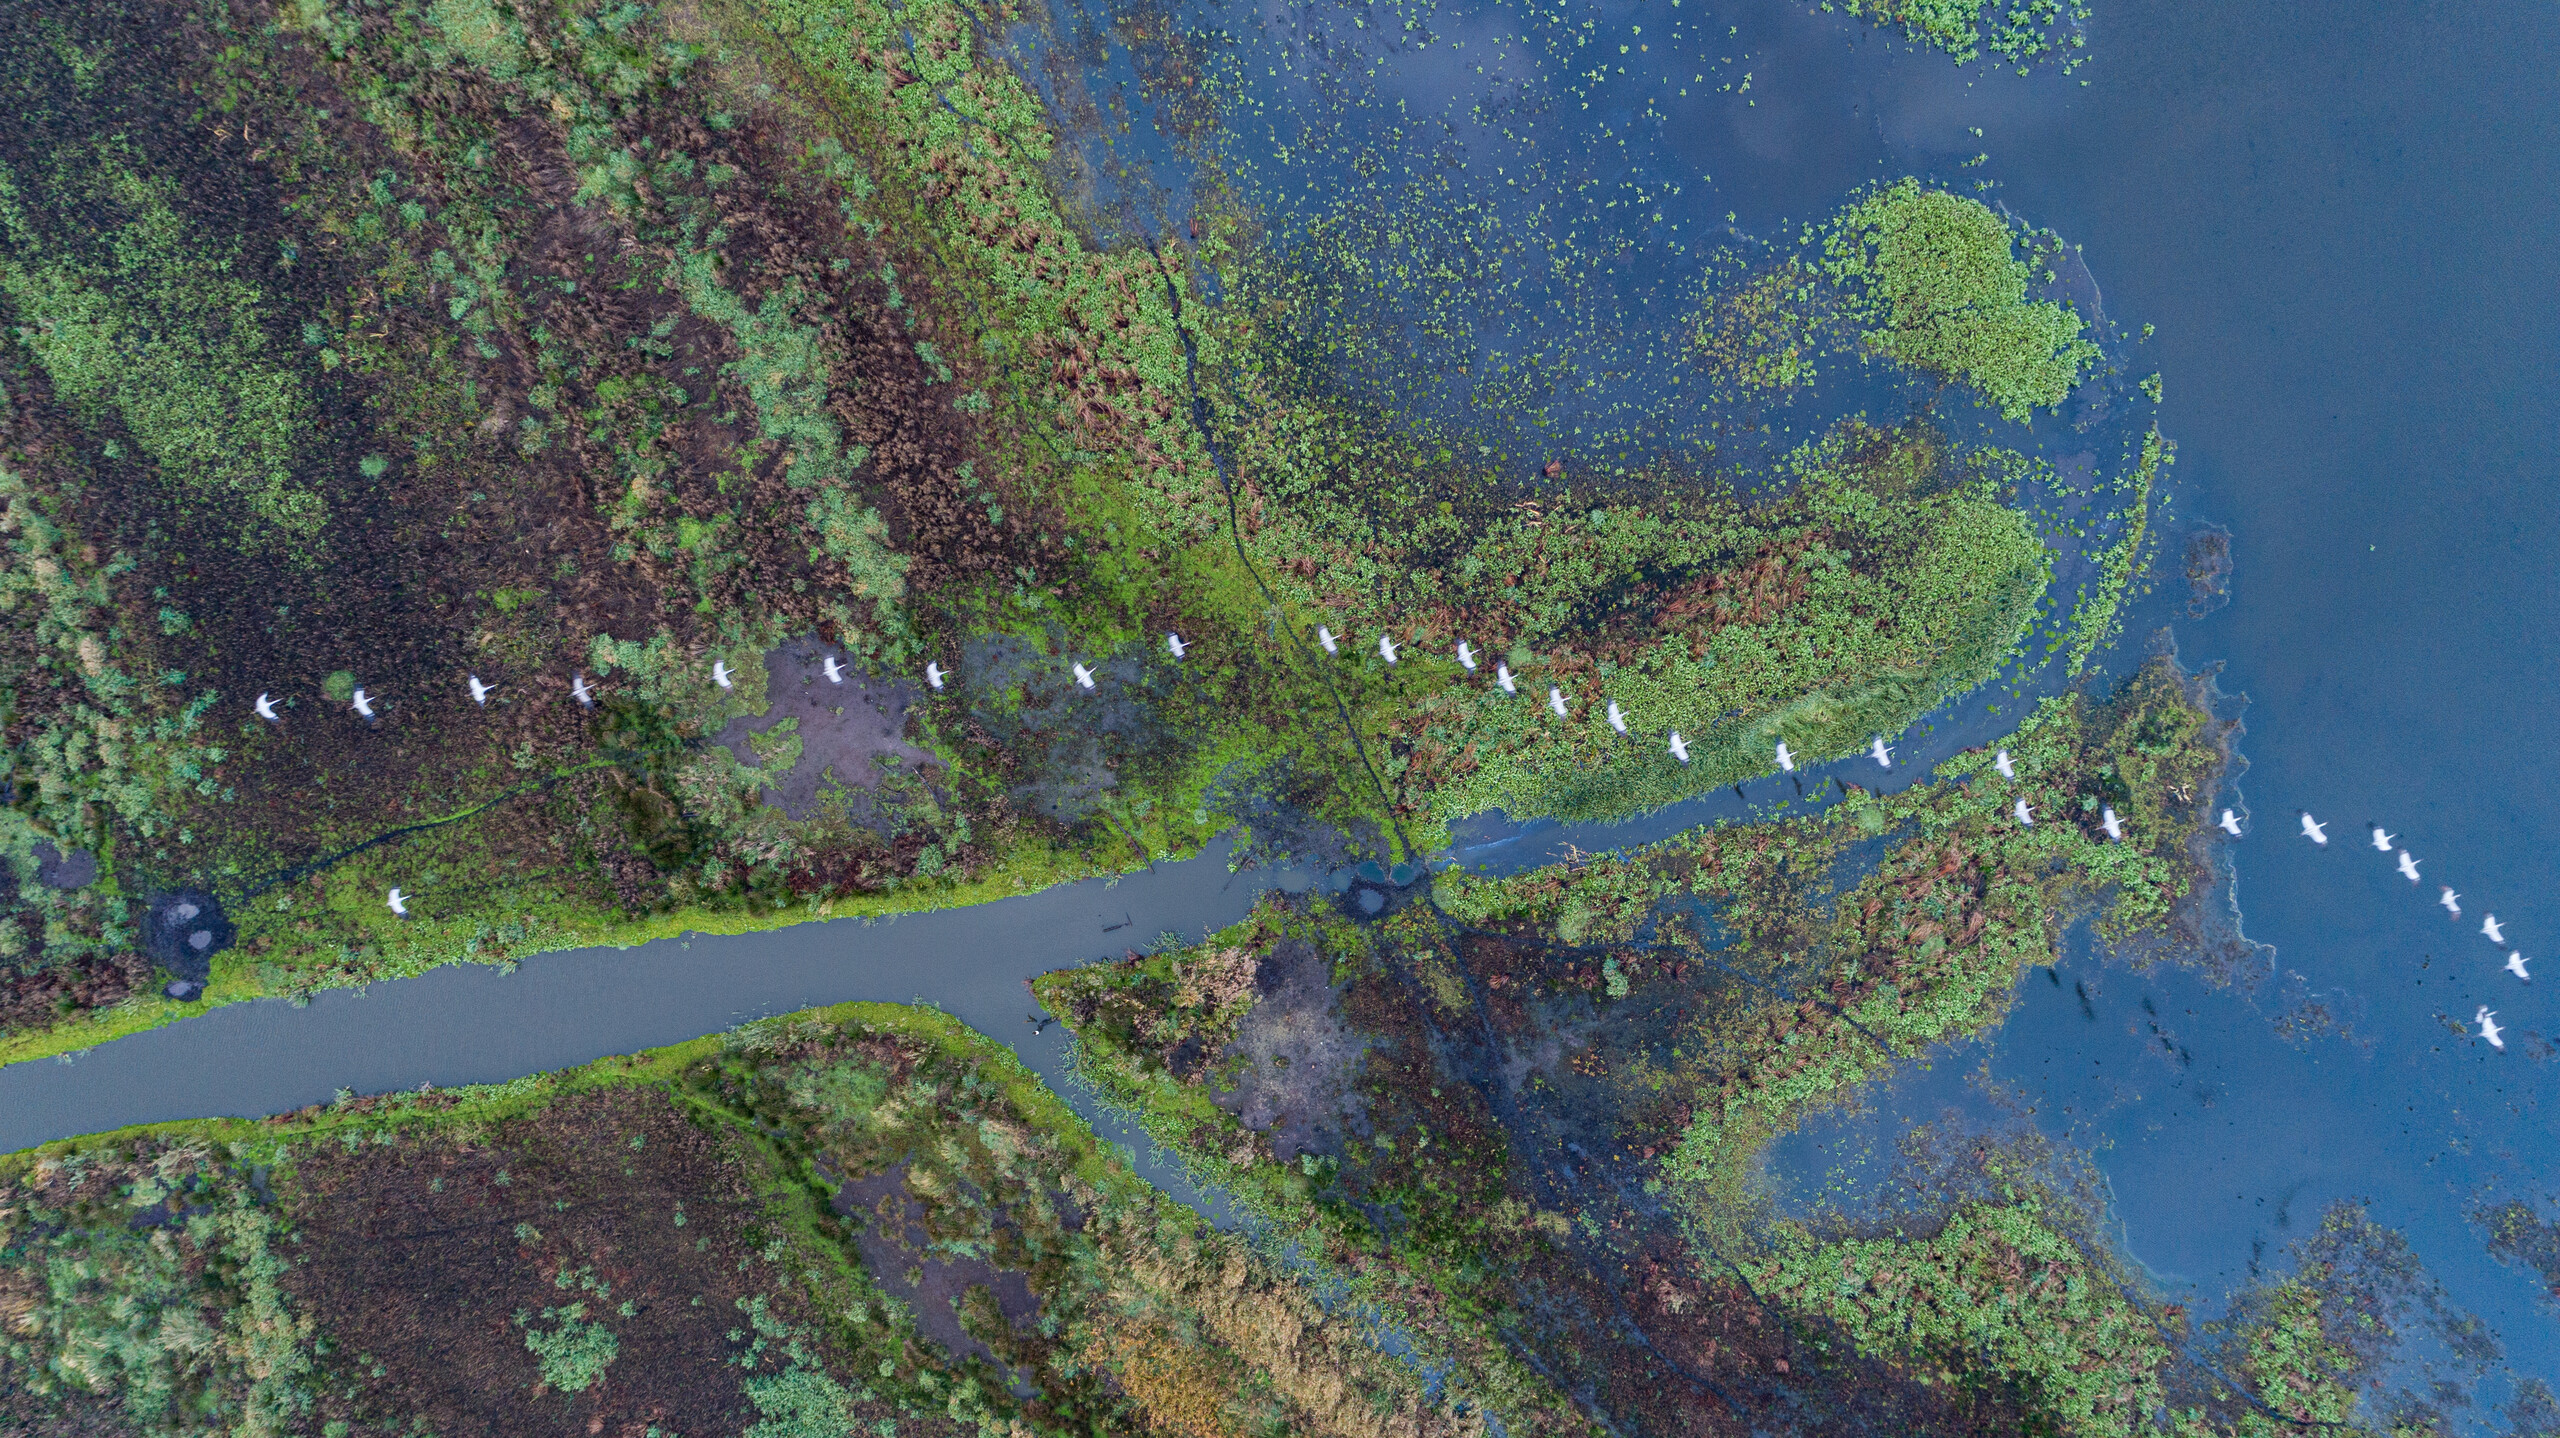 Veduta aerea di gru europee (Grus grus) che sorvolano la palude di Anklamer Stadtbruch, Rewilding Europe Oder Delta, Meclemburgo-Pomerania occidentale, Germania, ottobre 2020